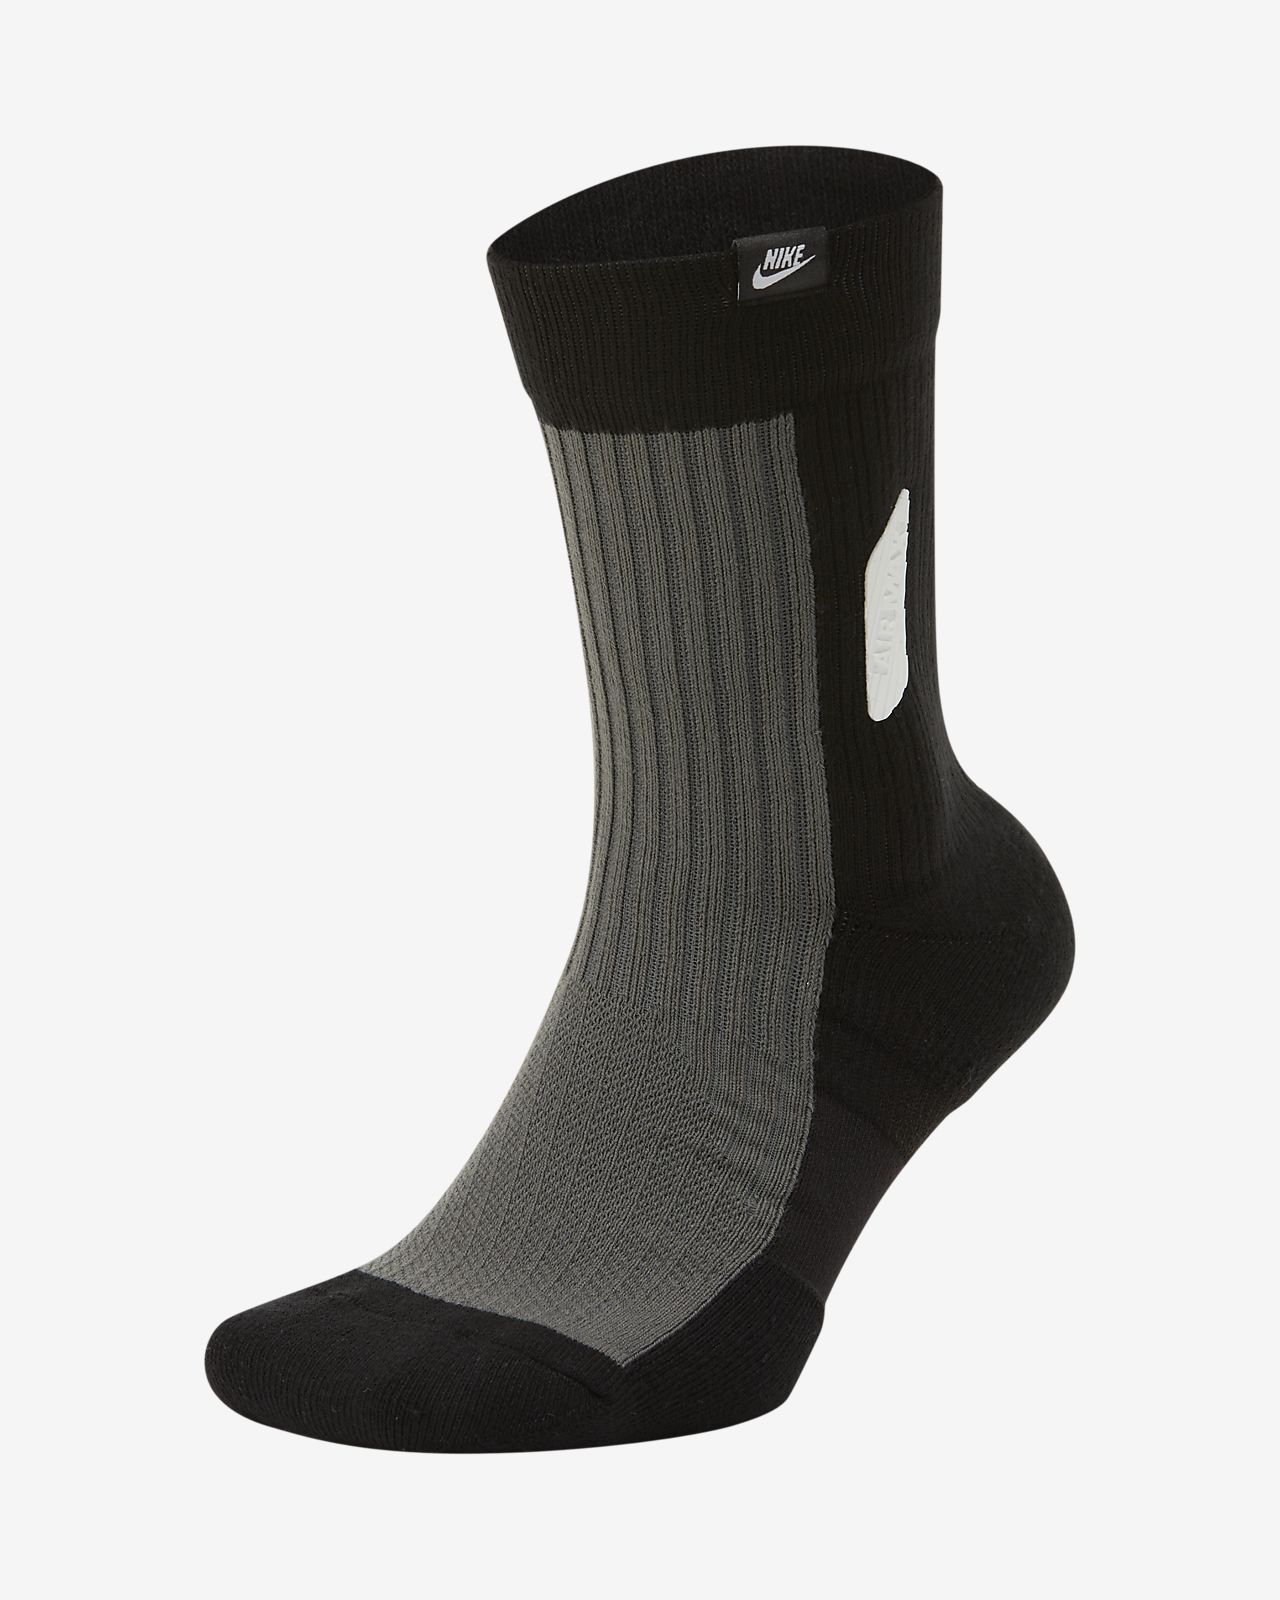 nike air max socks black